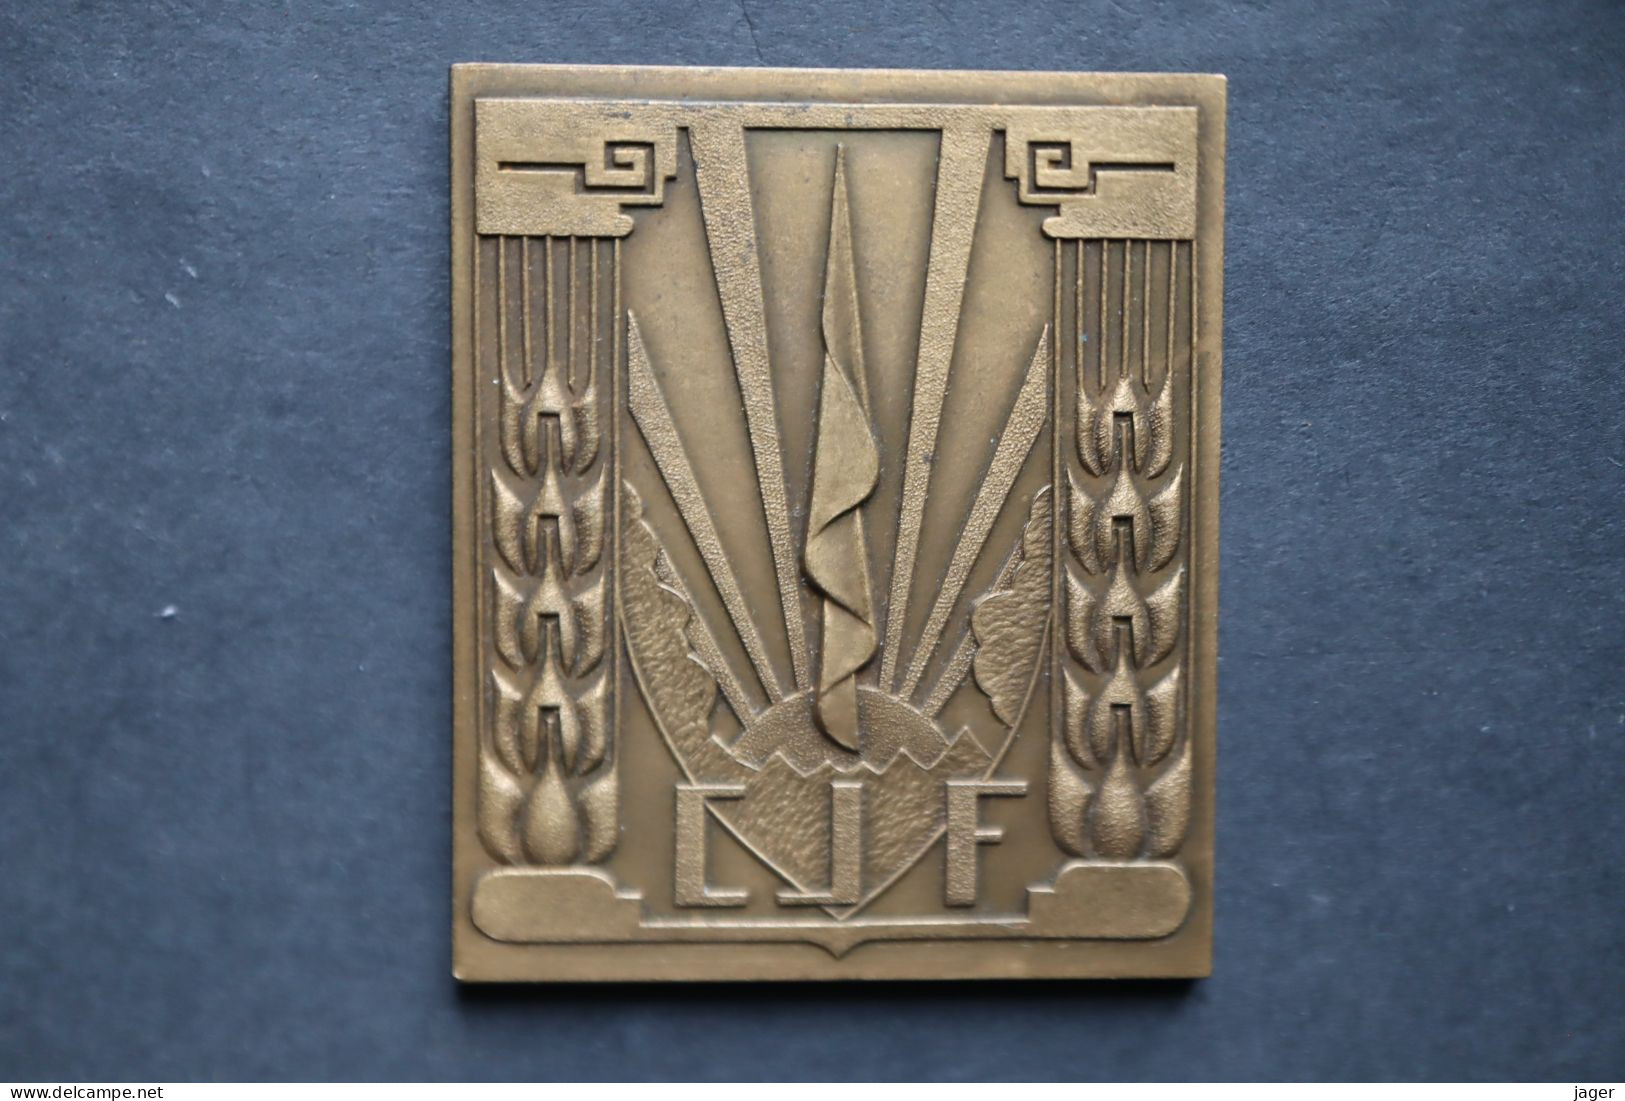 Plaque En Bronze CJF 1940 1944 Chantier De Jeunesse - 1939-45